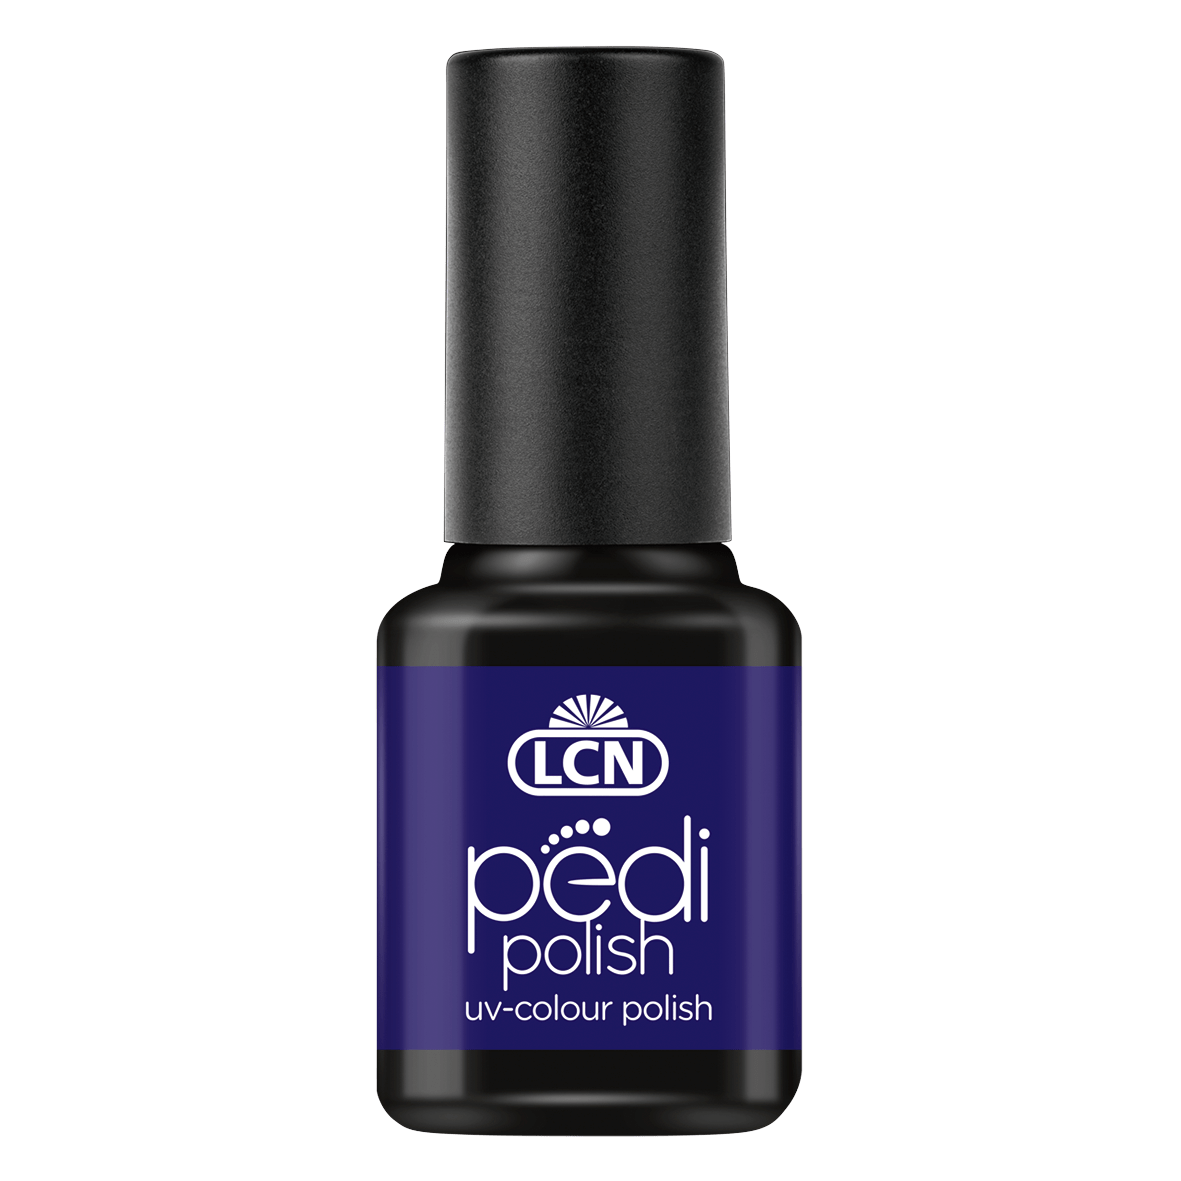 LCN - Pedi Polish UV-Colour Polish, 8 ml